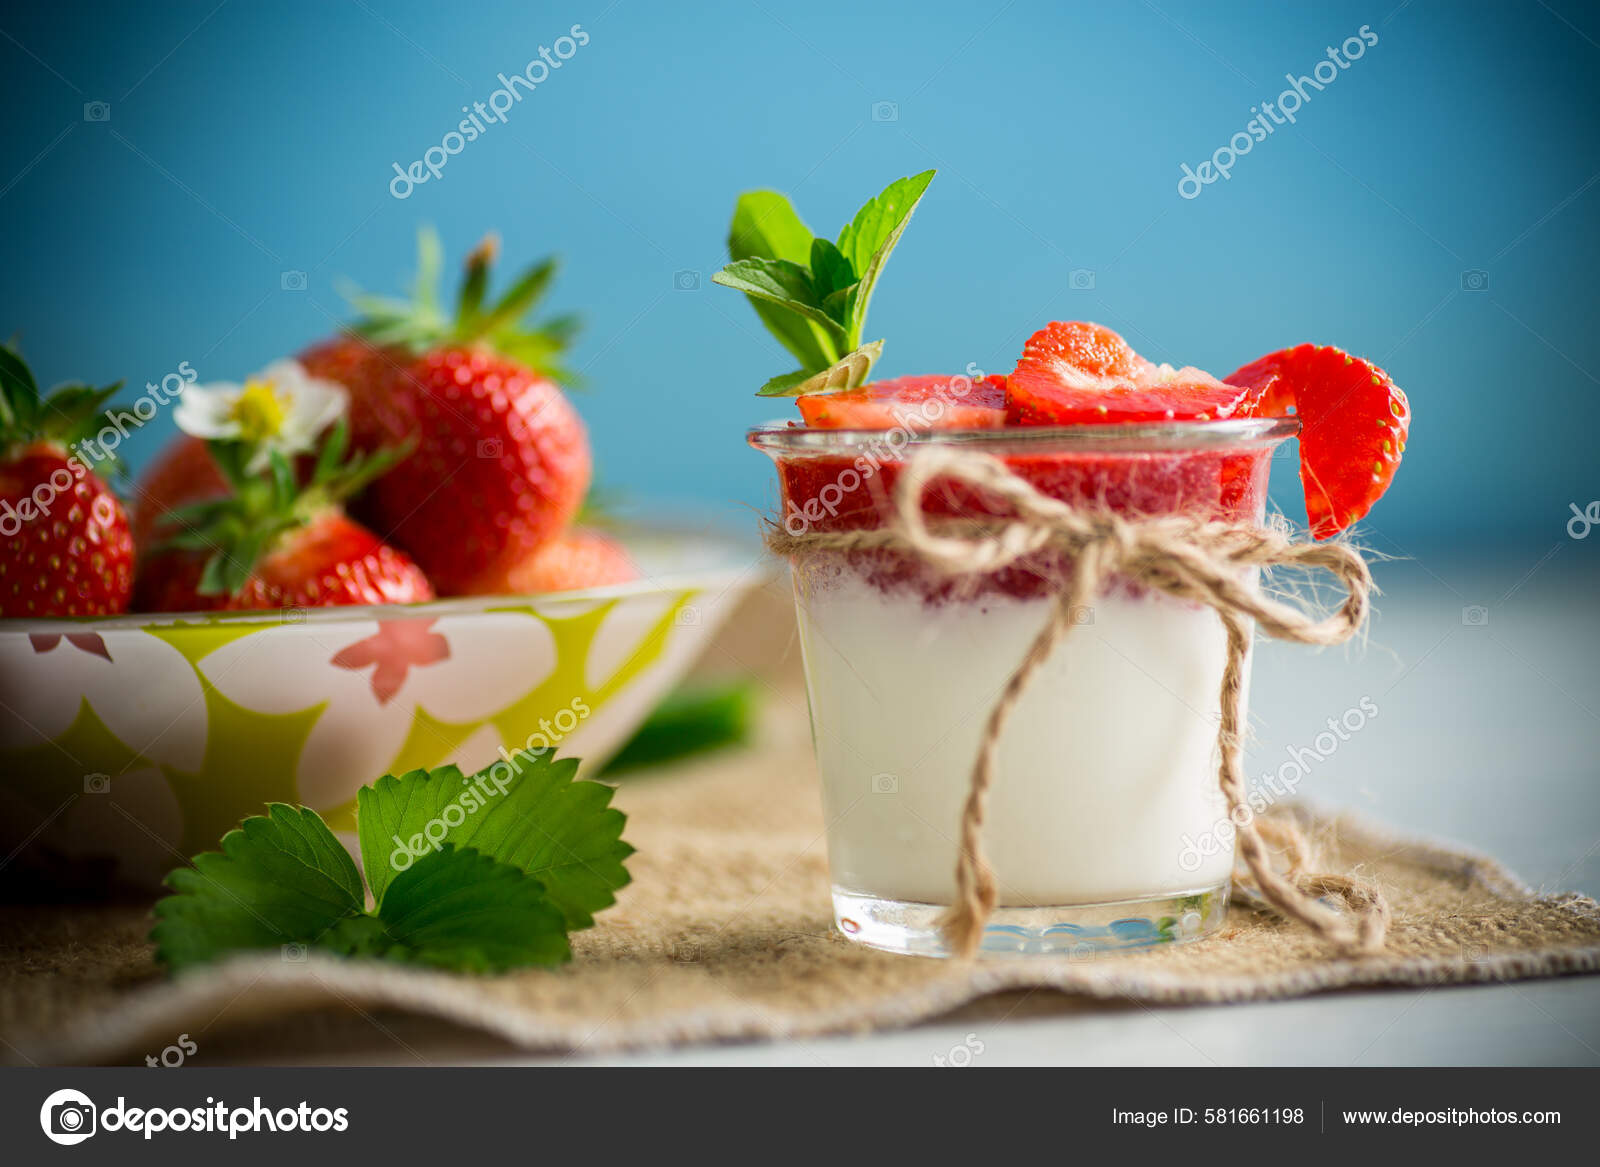 https://st.depositphotos.com/1011812/58166/i/1600/depositphotos_581661198-stock-photo-sweet-homemade-yogurt-strawberry-jam.jpg